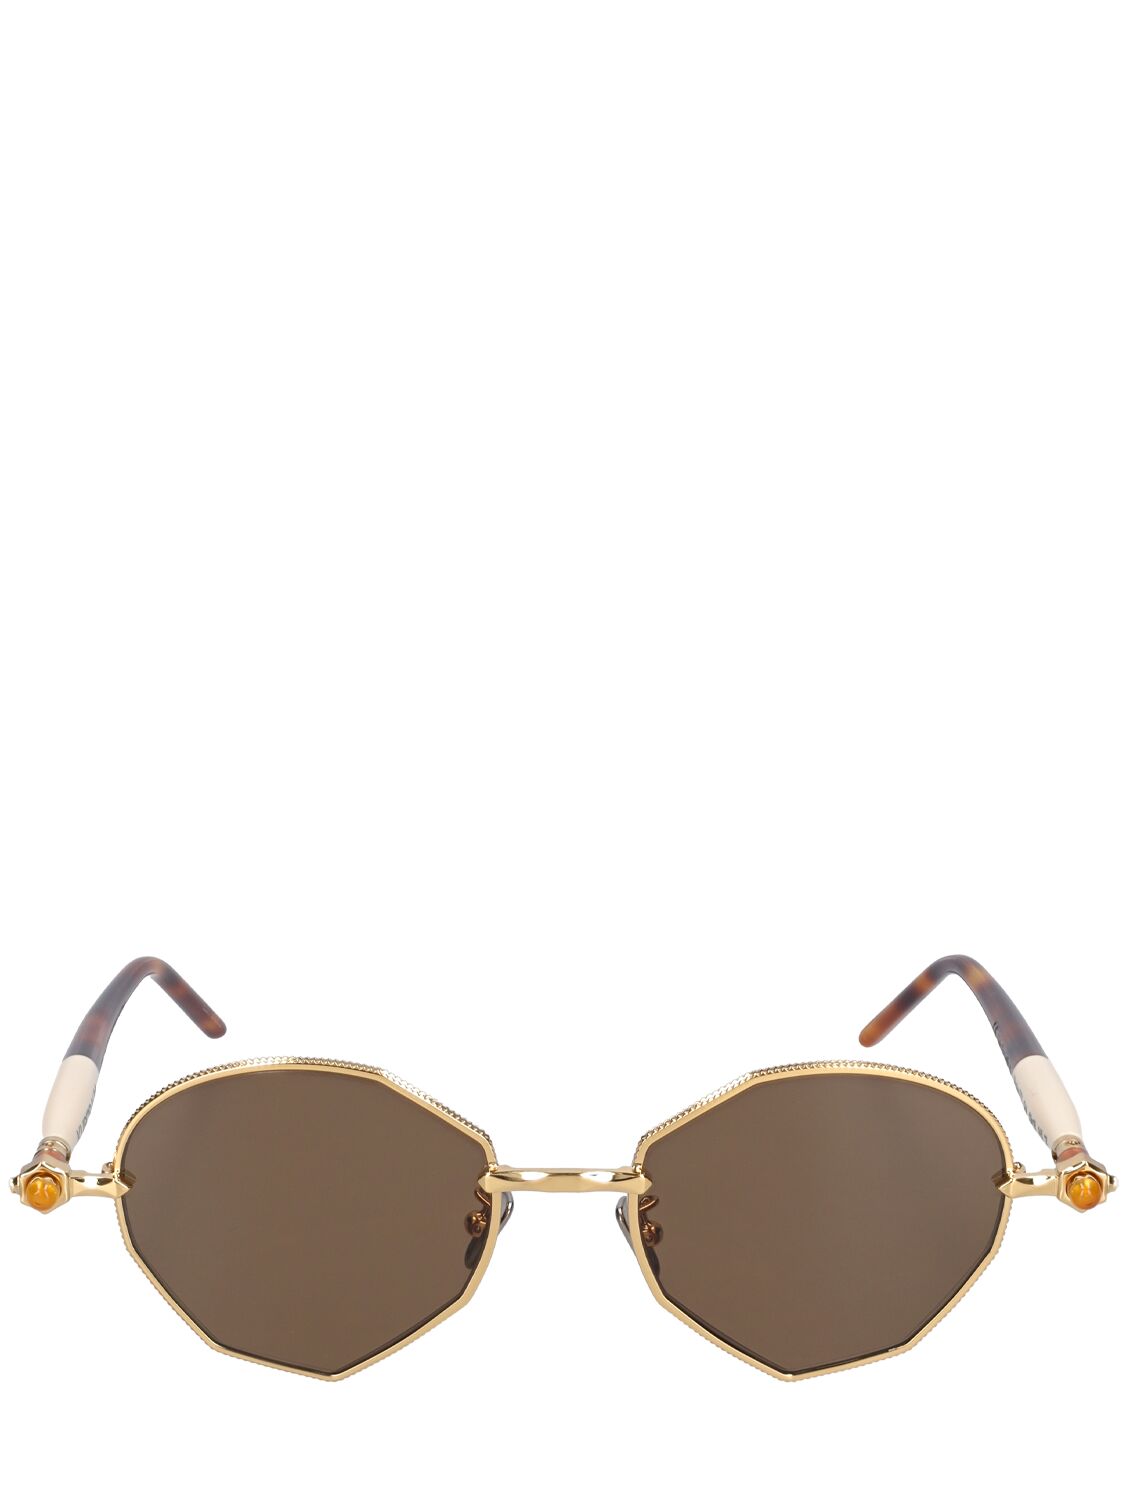 Kuboraum Berlin P71 Round Asymmetrical Sunglasses In Gold